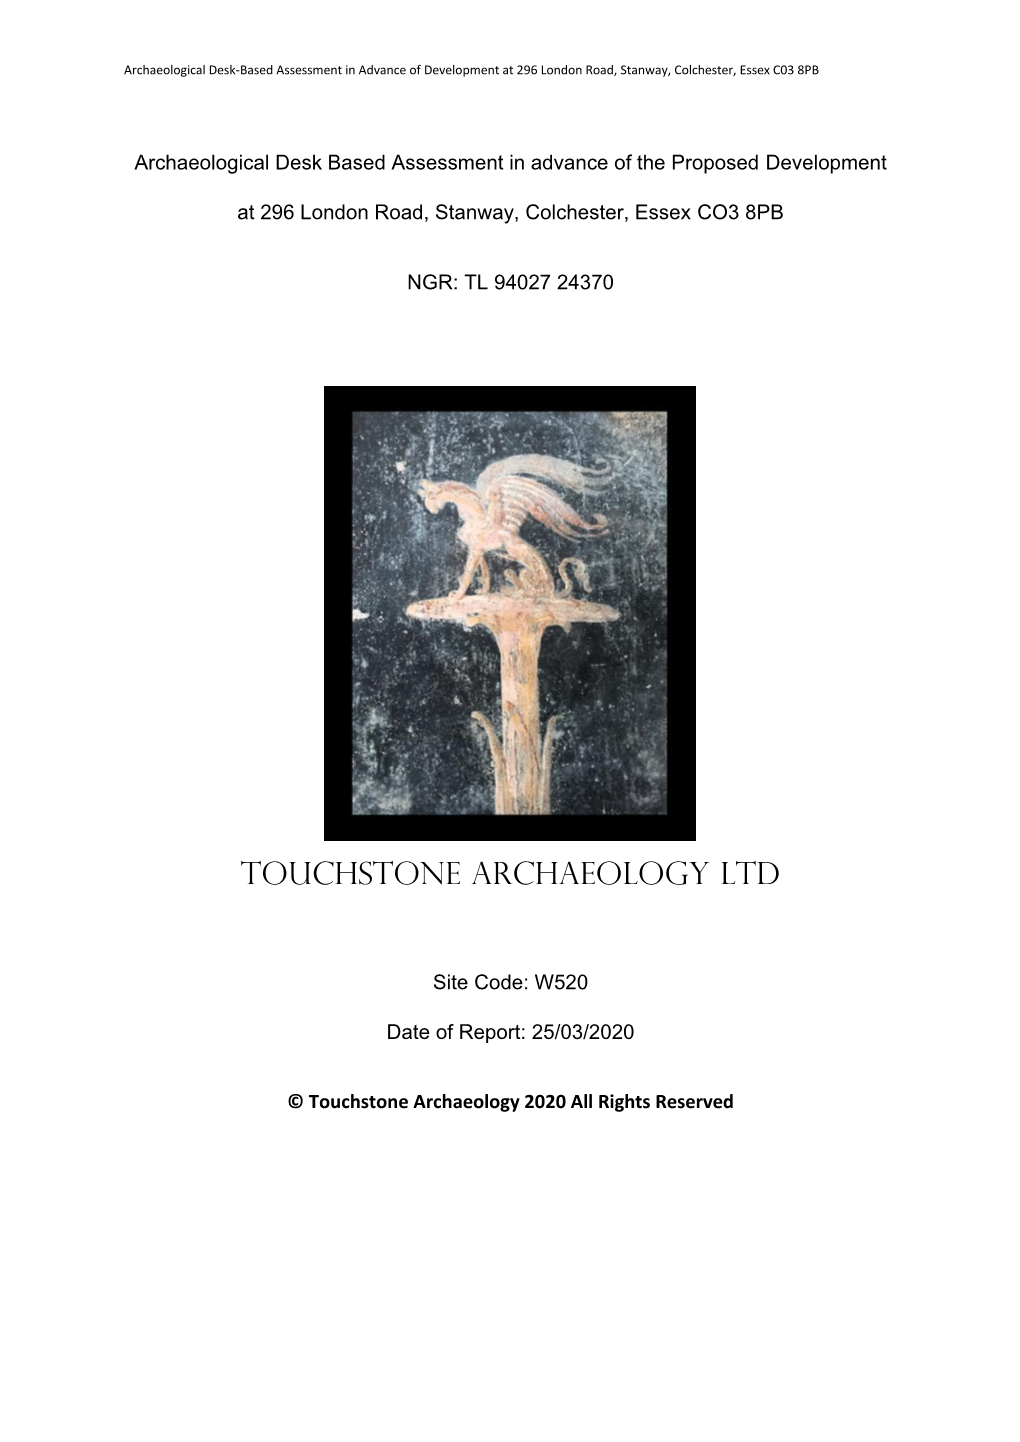 Touchstone Archaeology Ltd